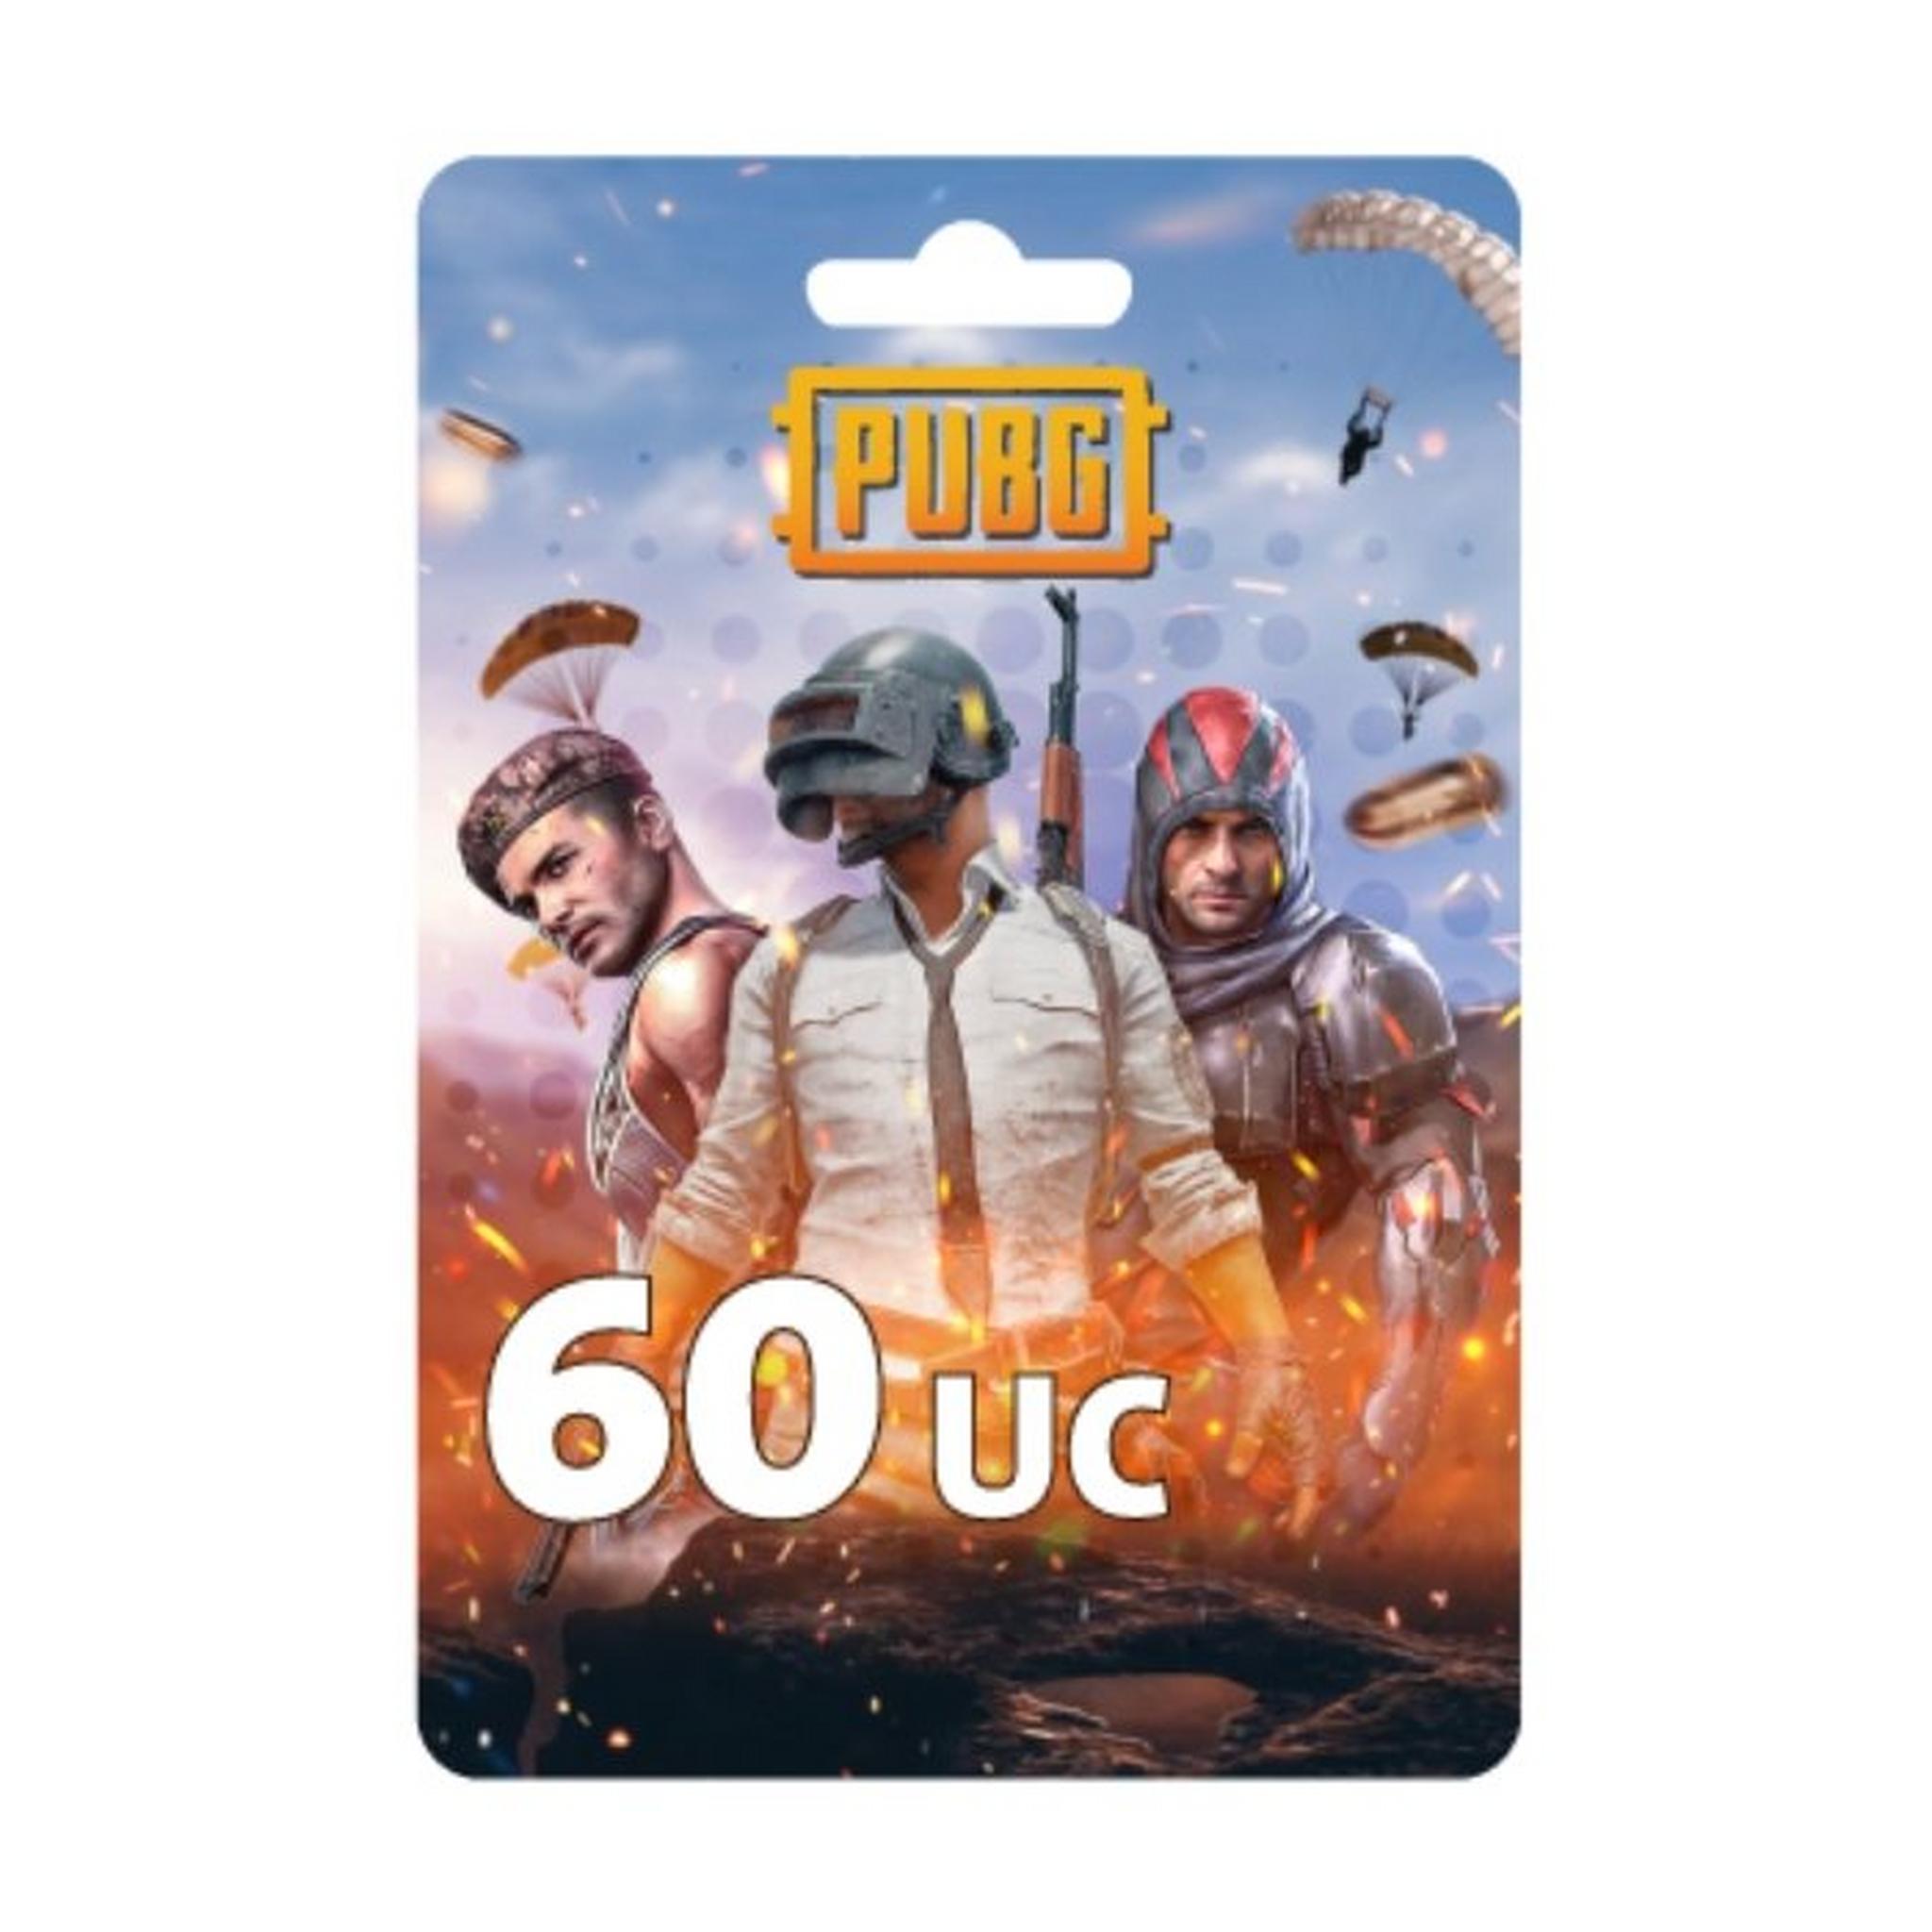 PUBG Game Point - (60 UC) - $0.99